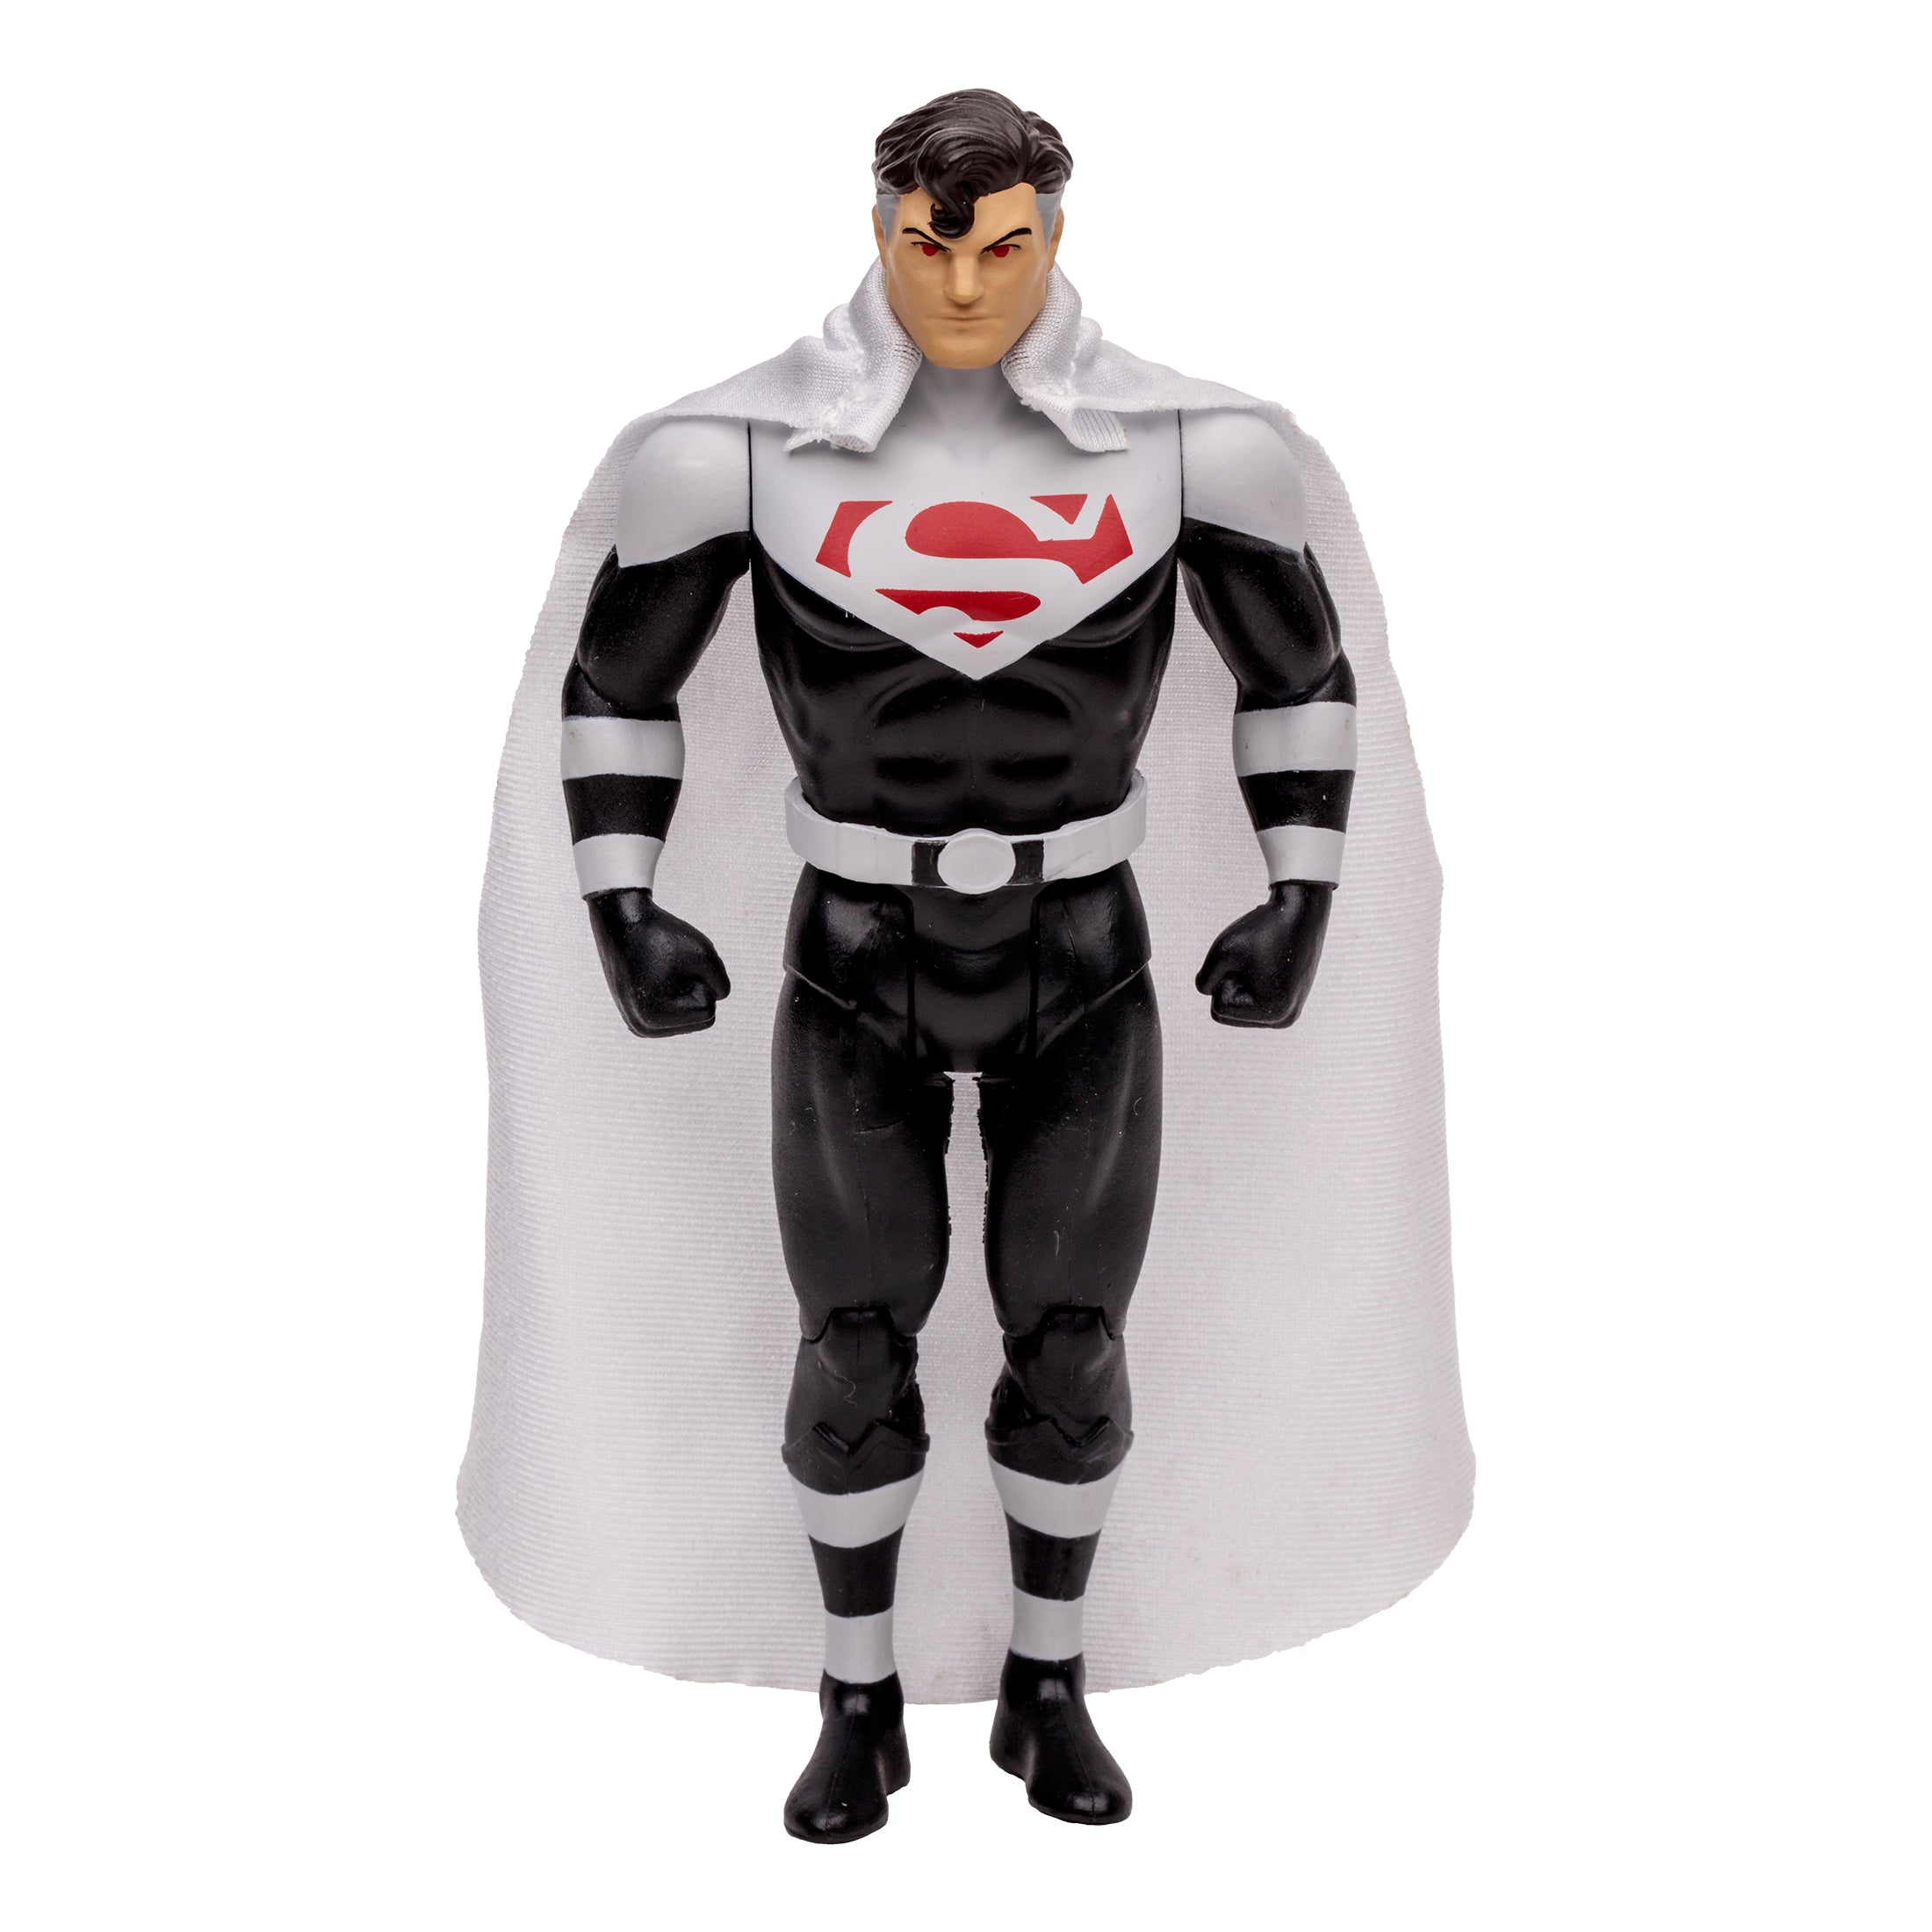 DC Direct Super Powers Figura de Accion: DC Comics Superman - Lord Superman 4.5 Pulgadas